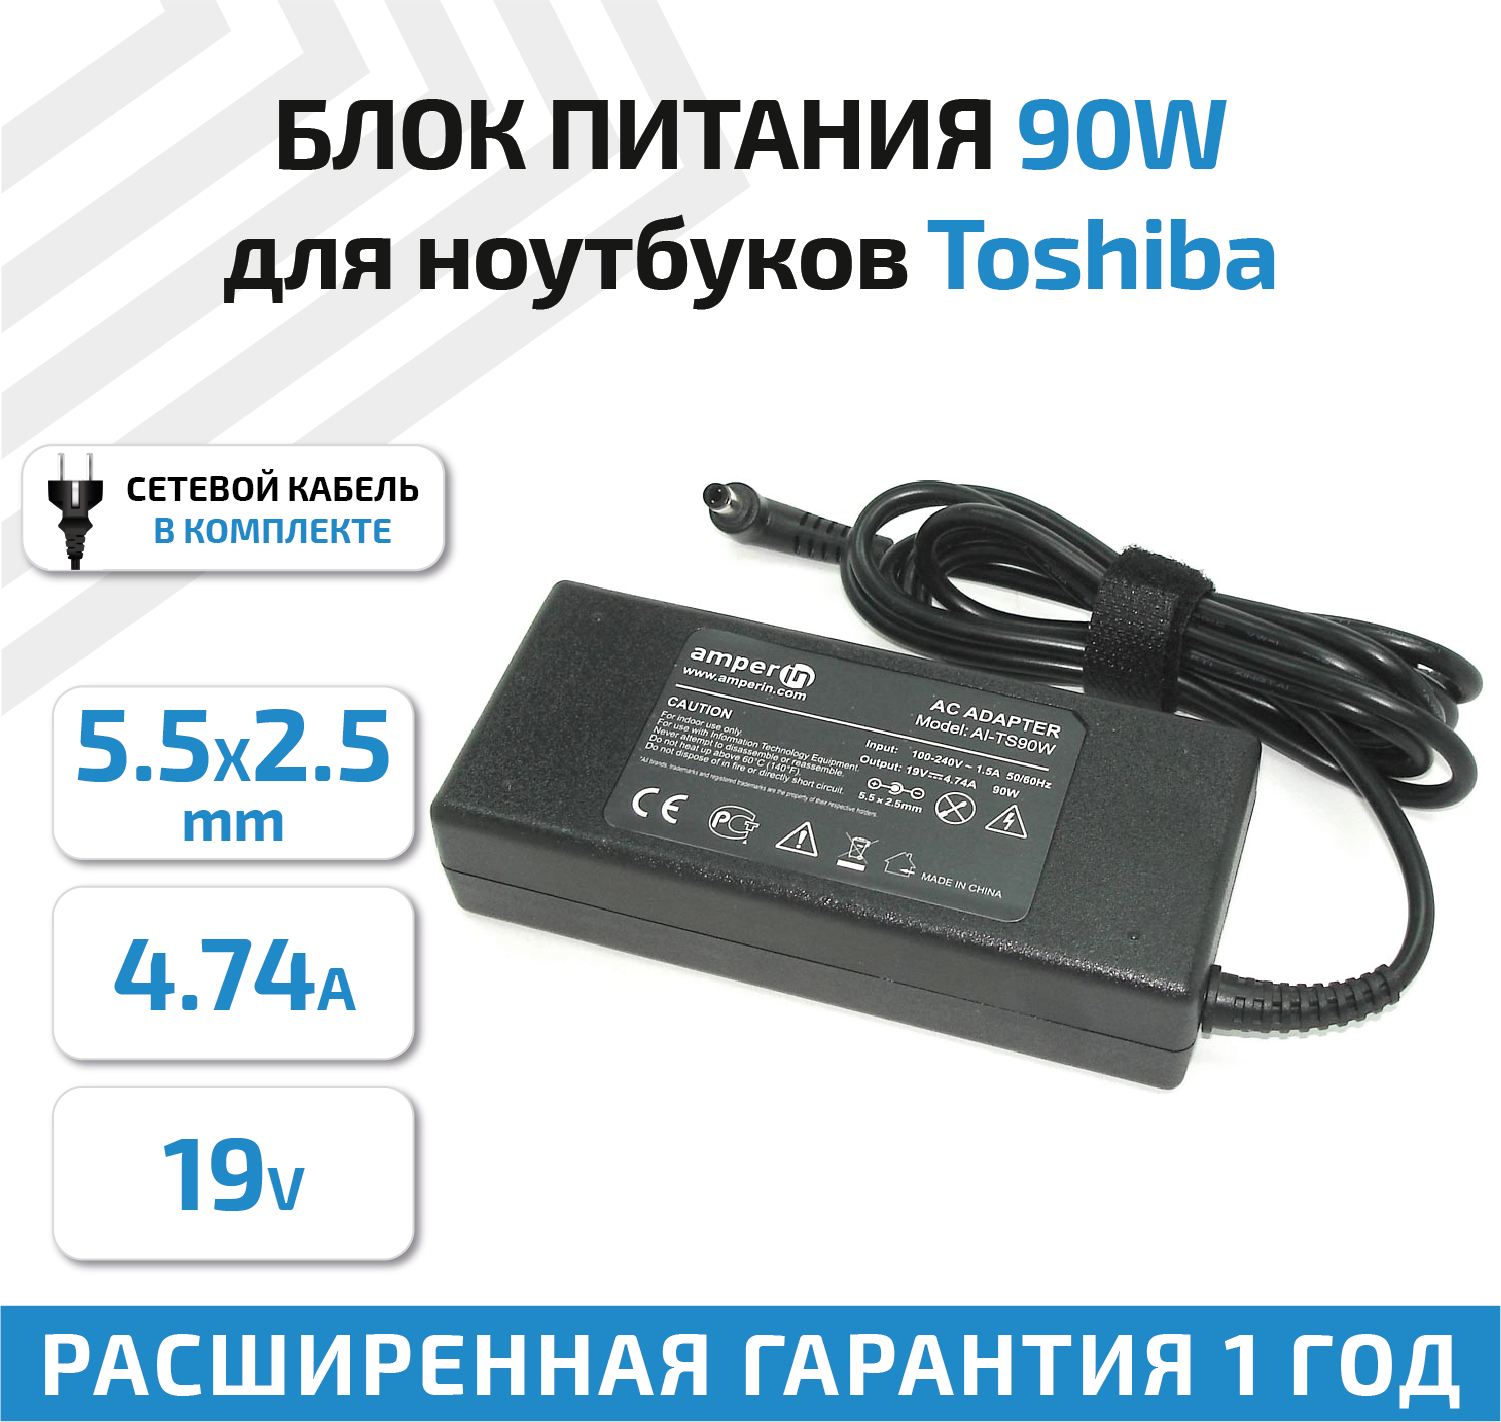 Блок питания (сетевой адаптер) Amperin AI-TS90W для ноутбуков Toshiba 19V 4.74A 5.5x2.5mm